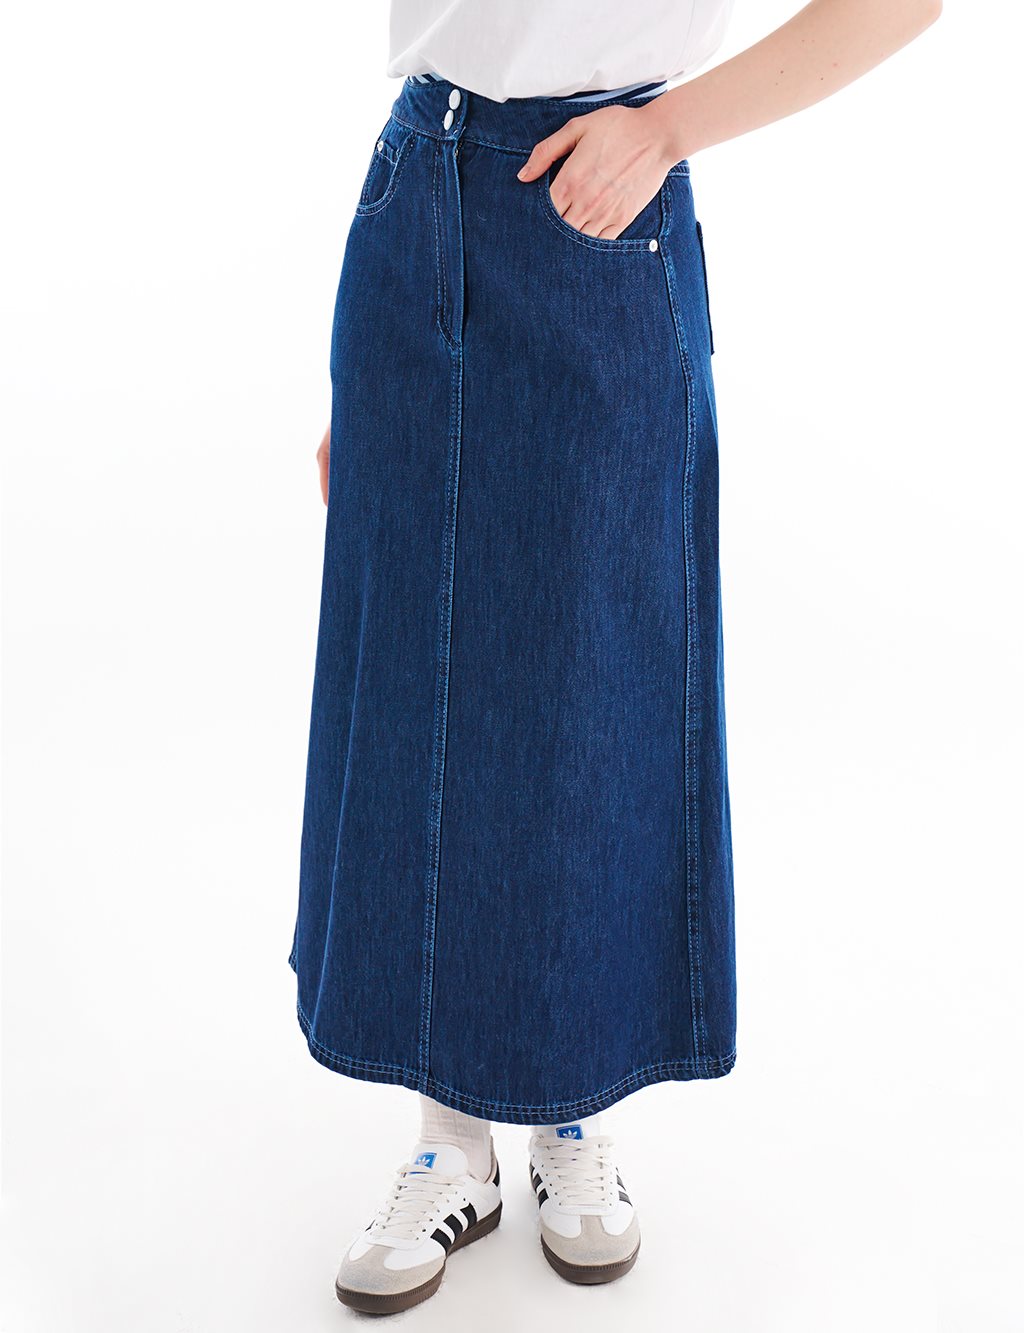 Elastic Waist Denim Skirt Navy Blue